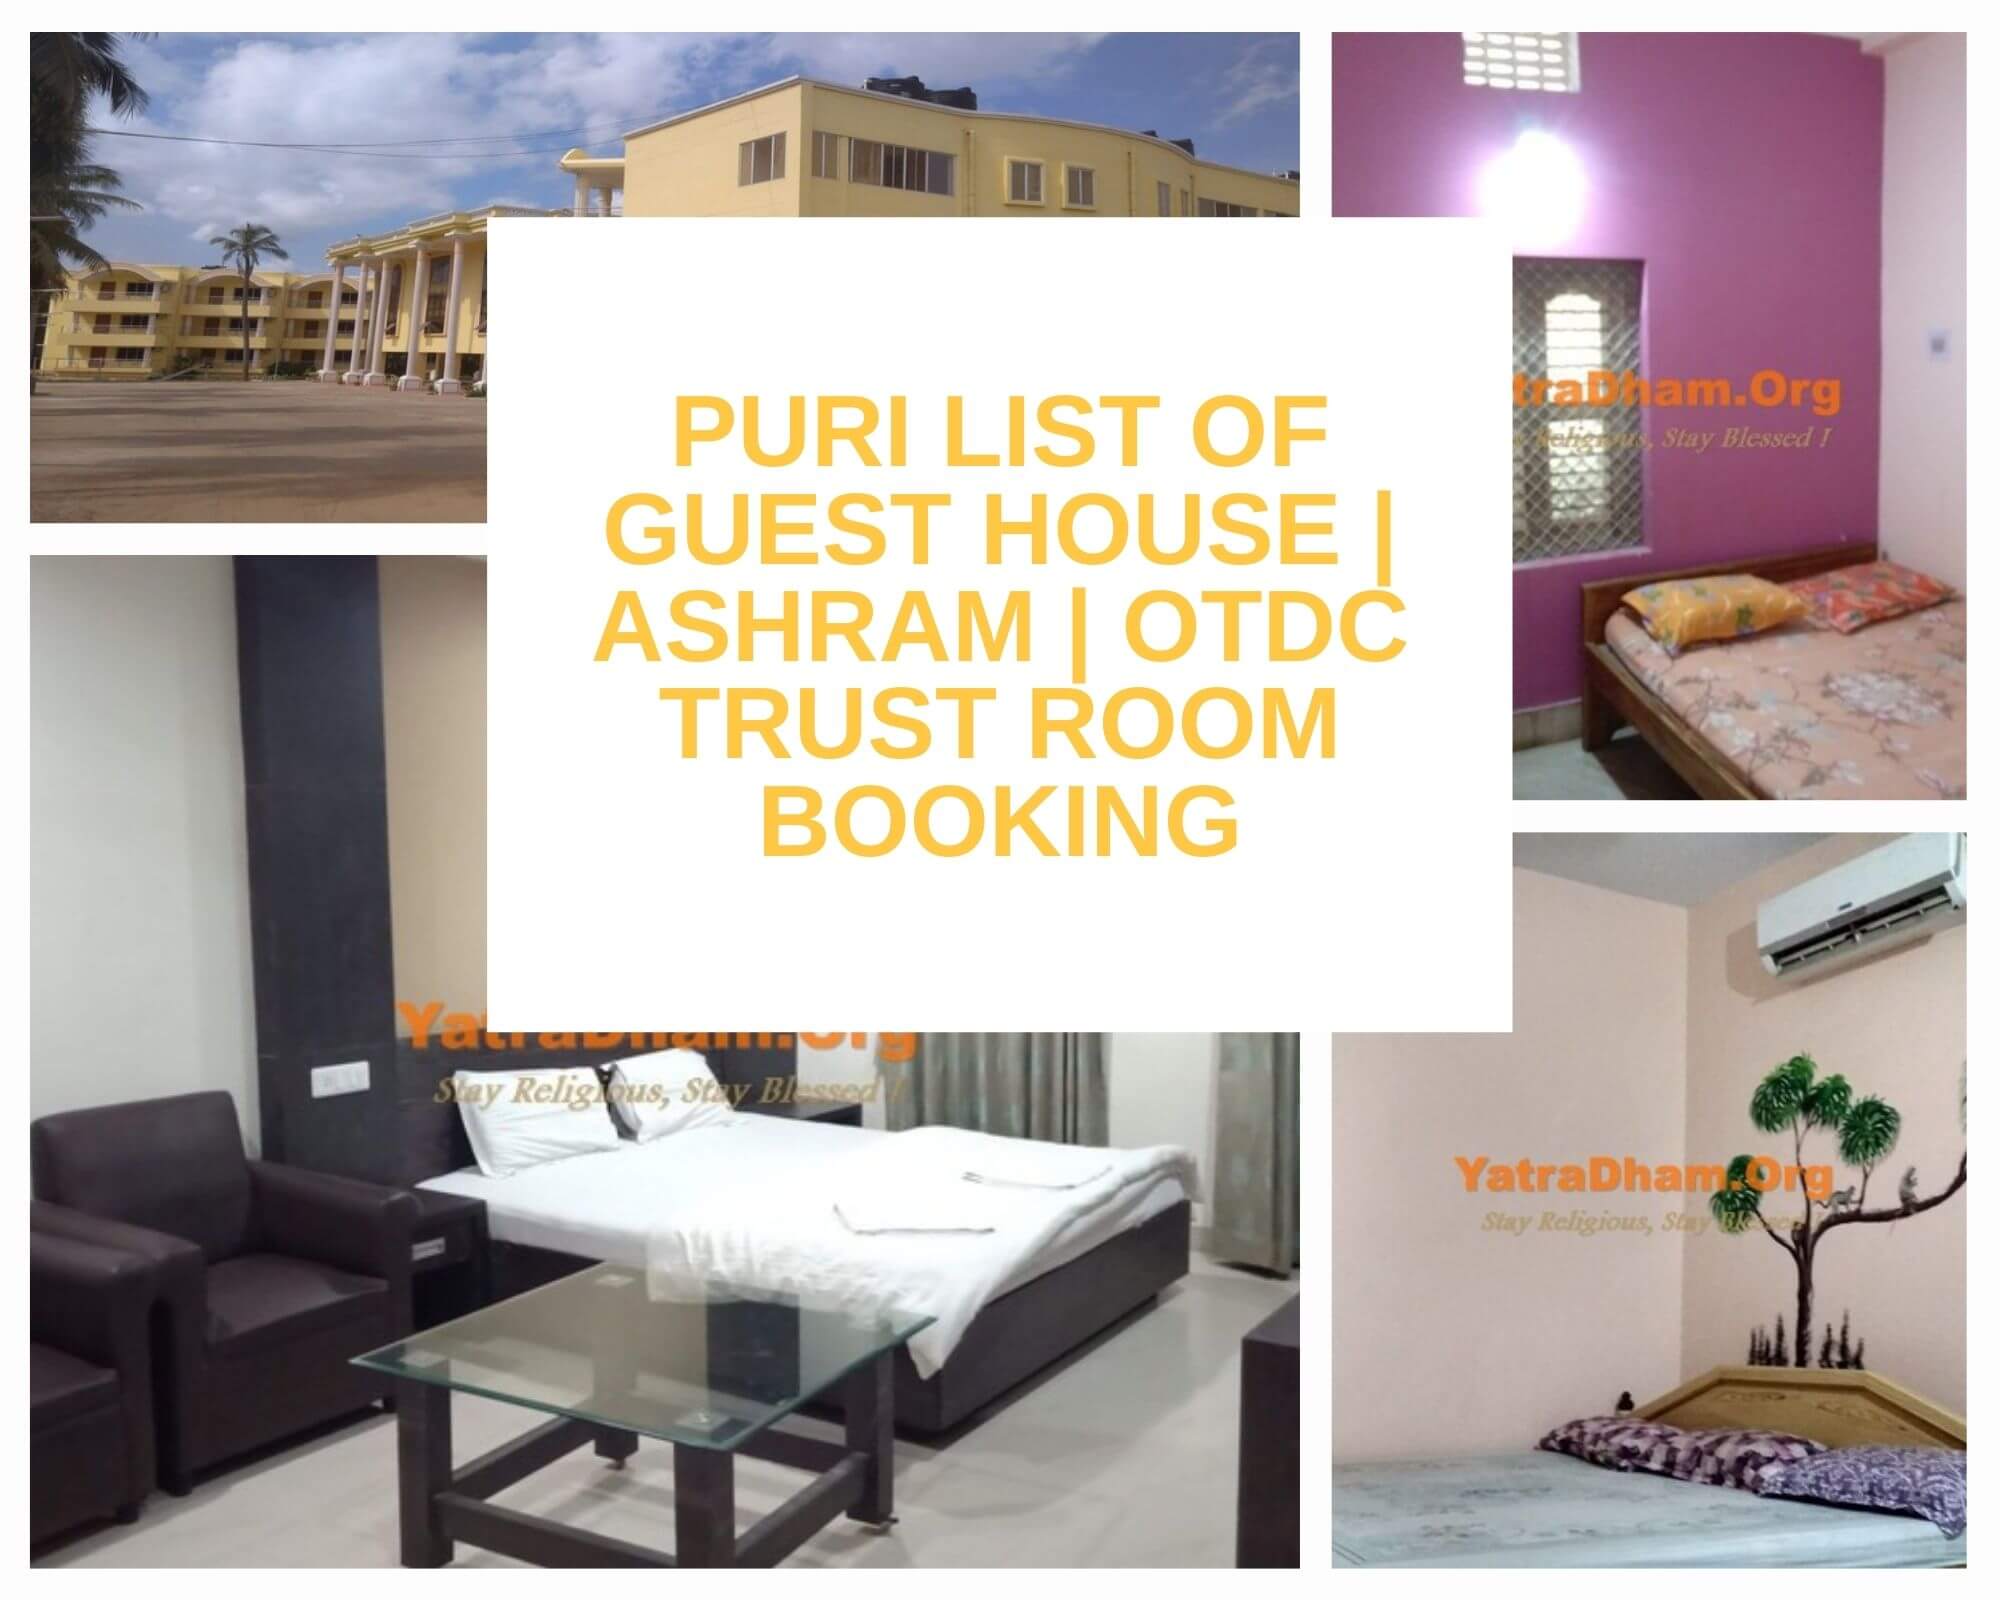 Puri List of Guest House | Ashram | OTDC Trust Room Booking